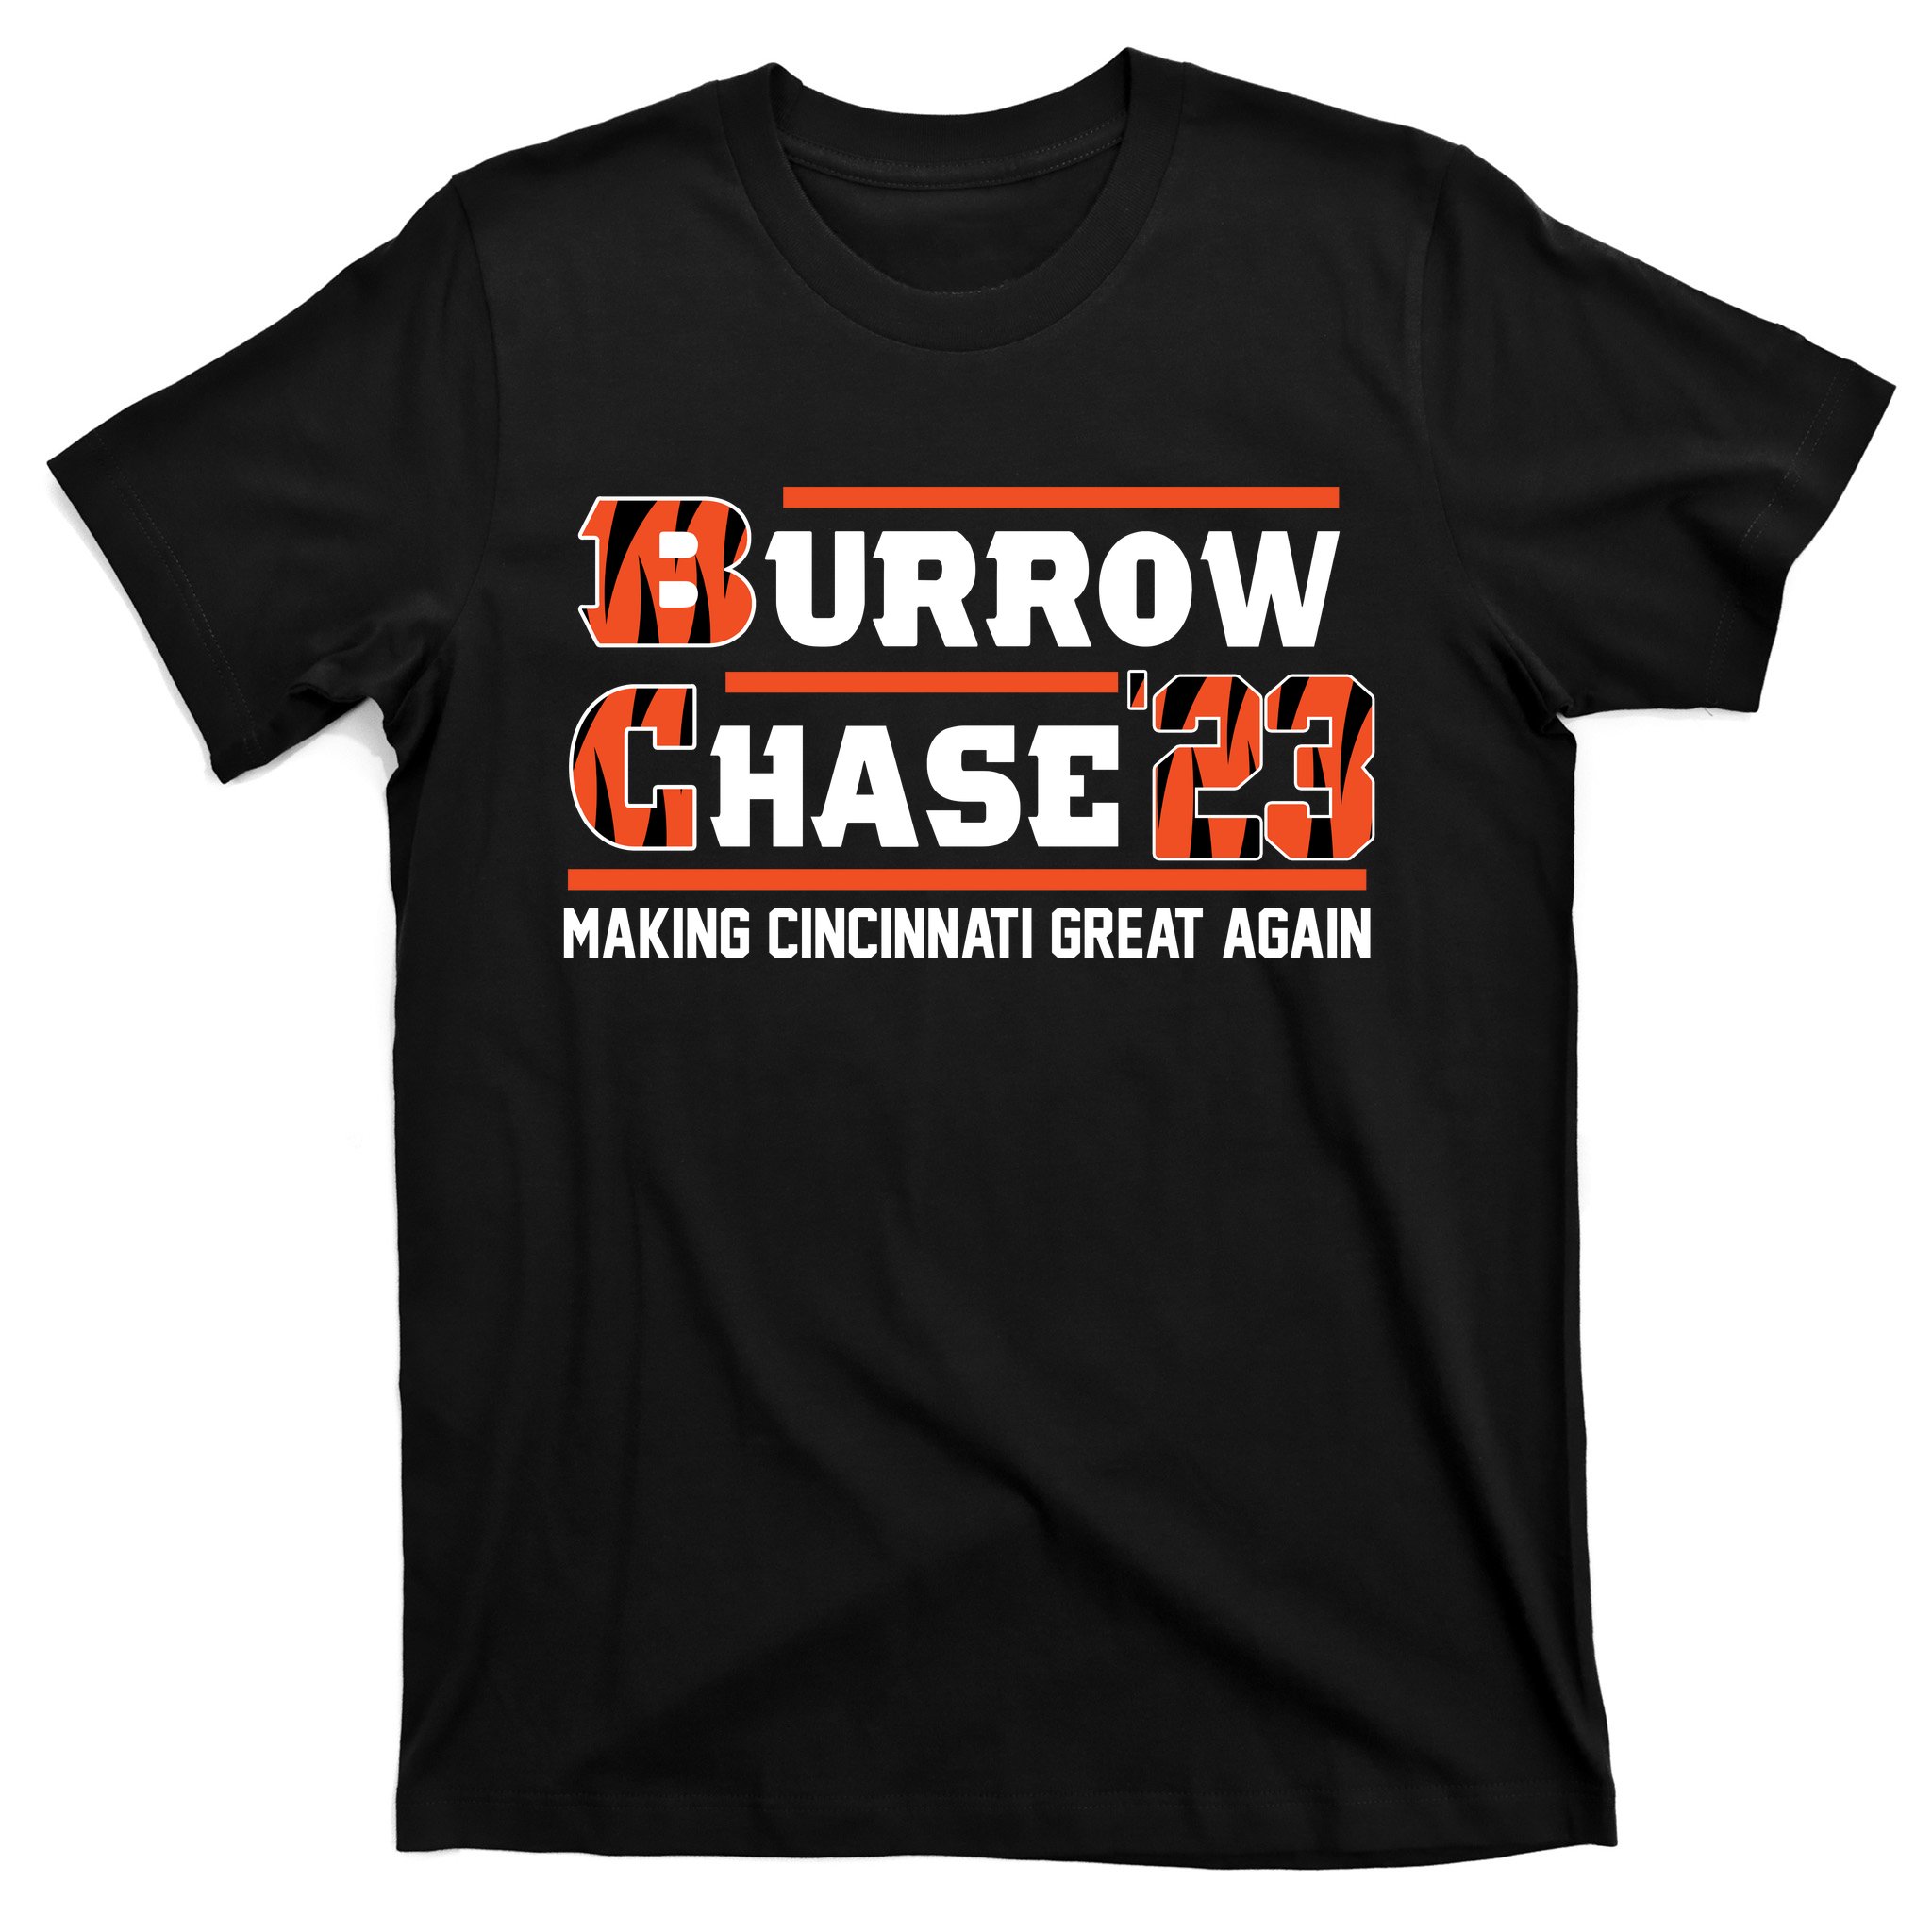 Teeshirtpalace Burrow Chase Making Cincinnati Great Again Ohio T-Shirt